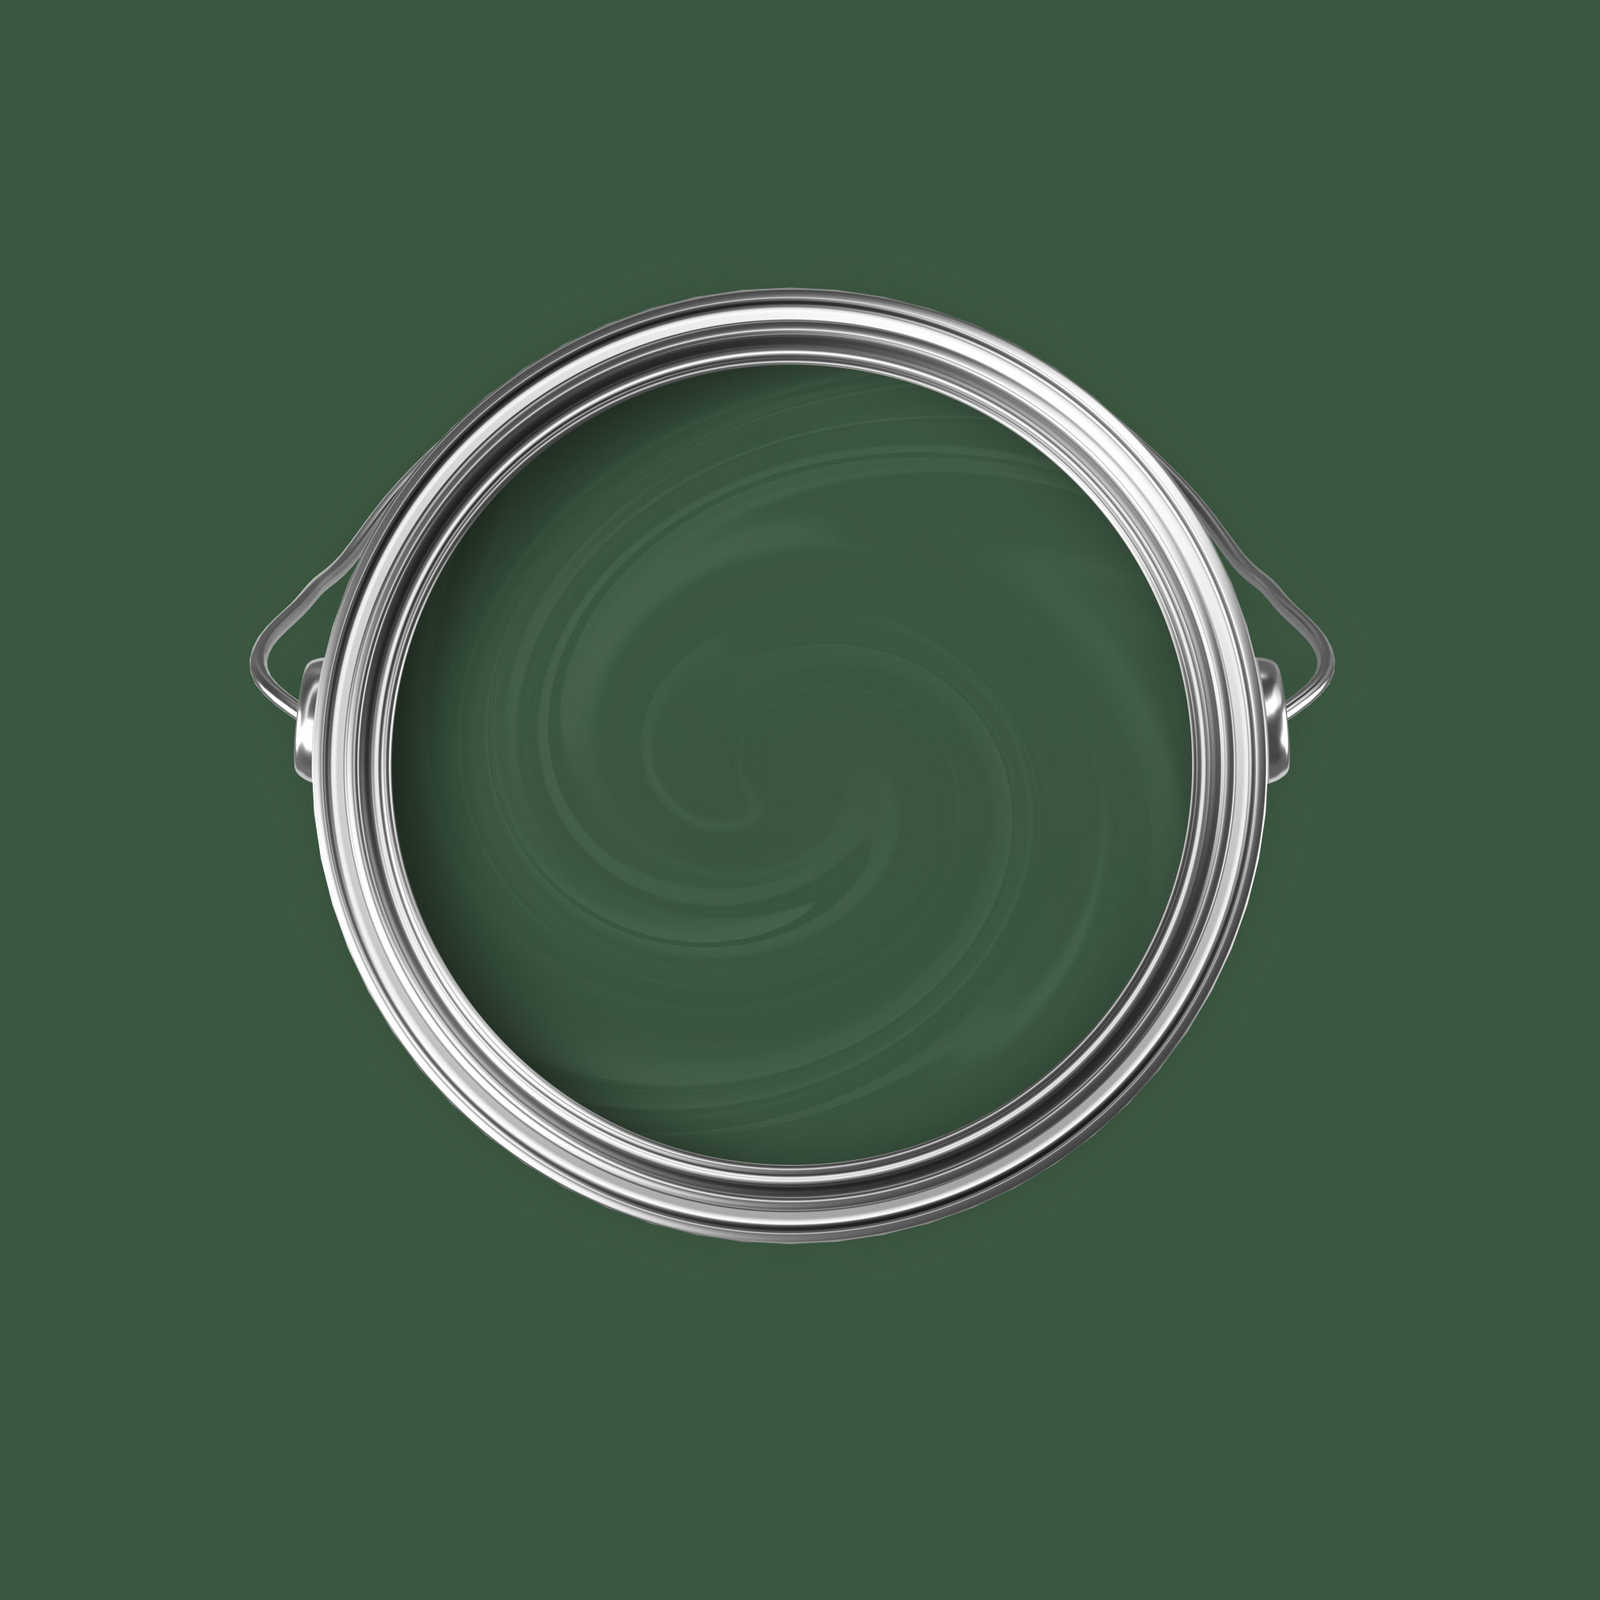             Pintura mural Premium Verde Musgo »Gorgeous Green« NW505 – 5 litro
        